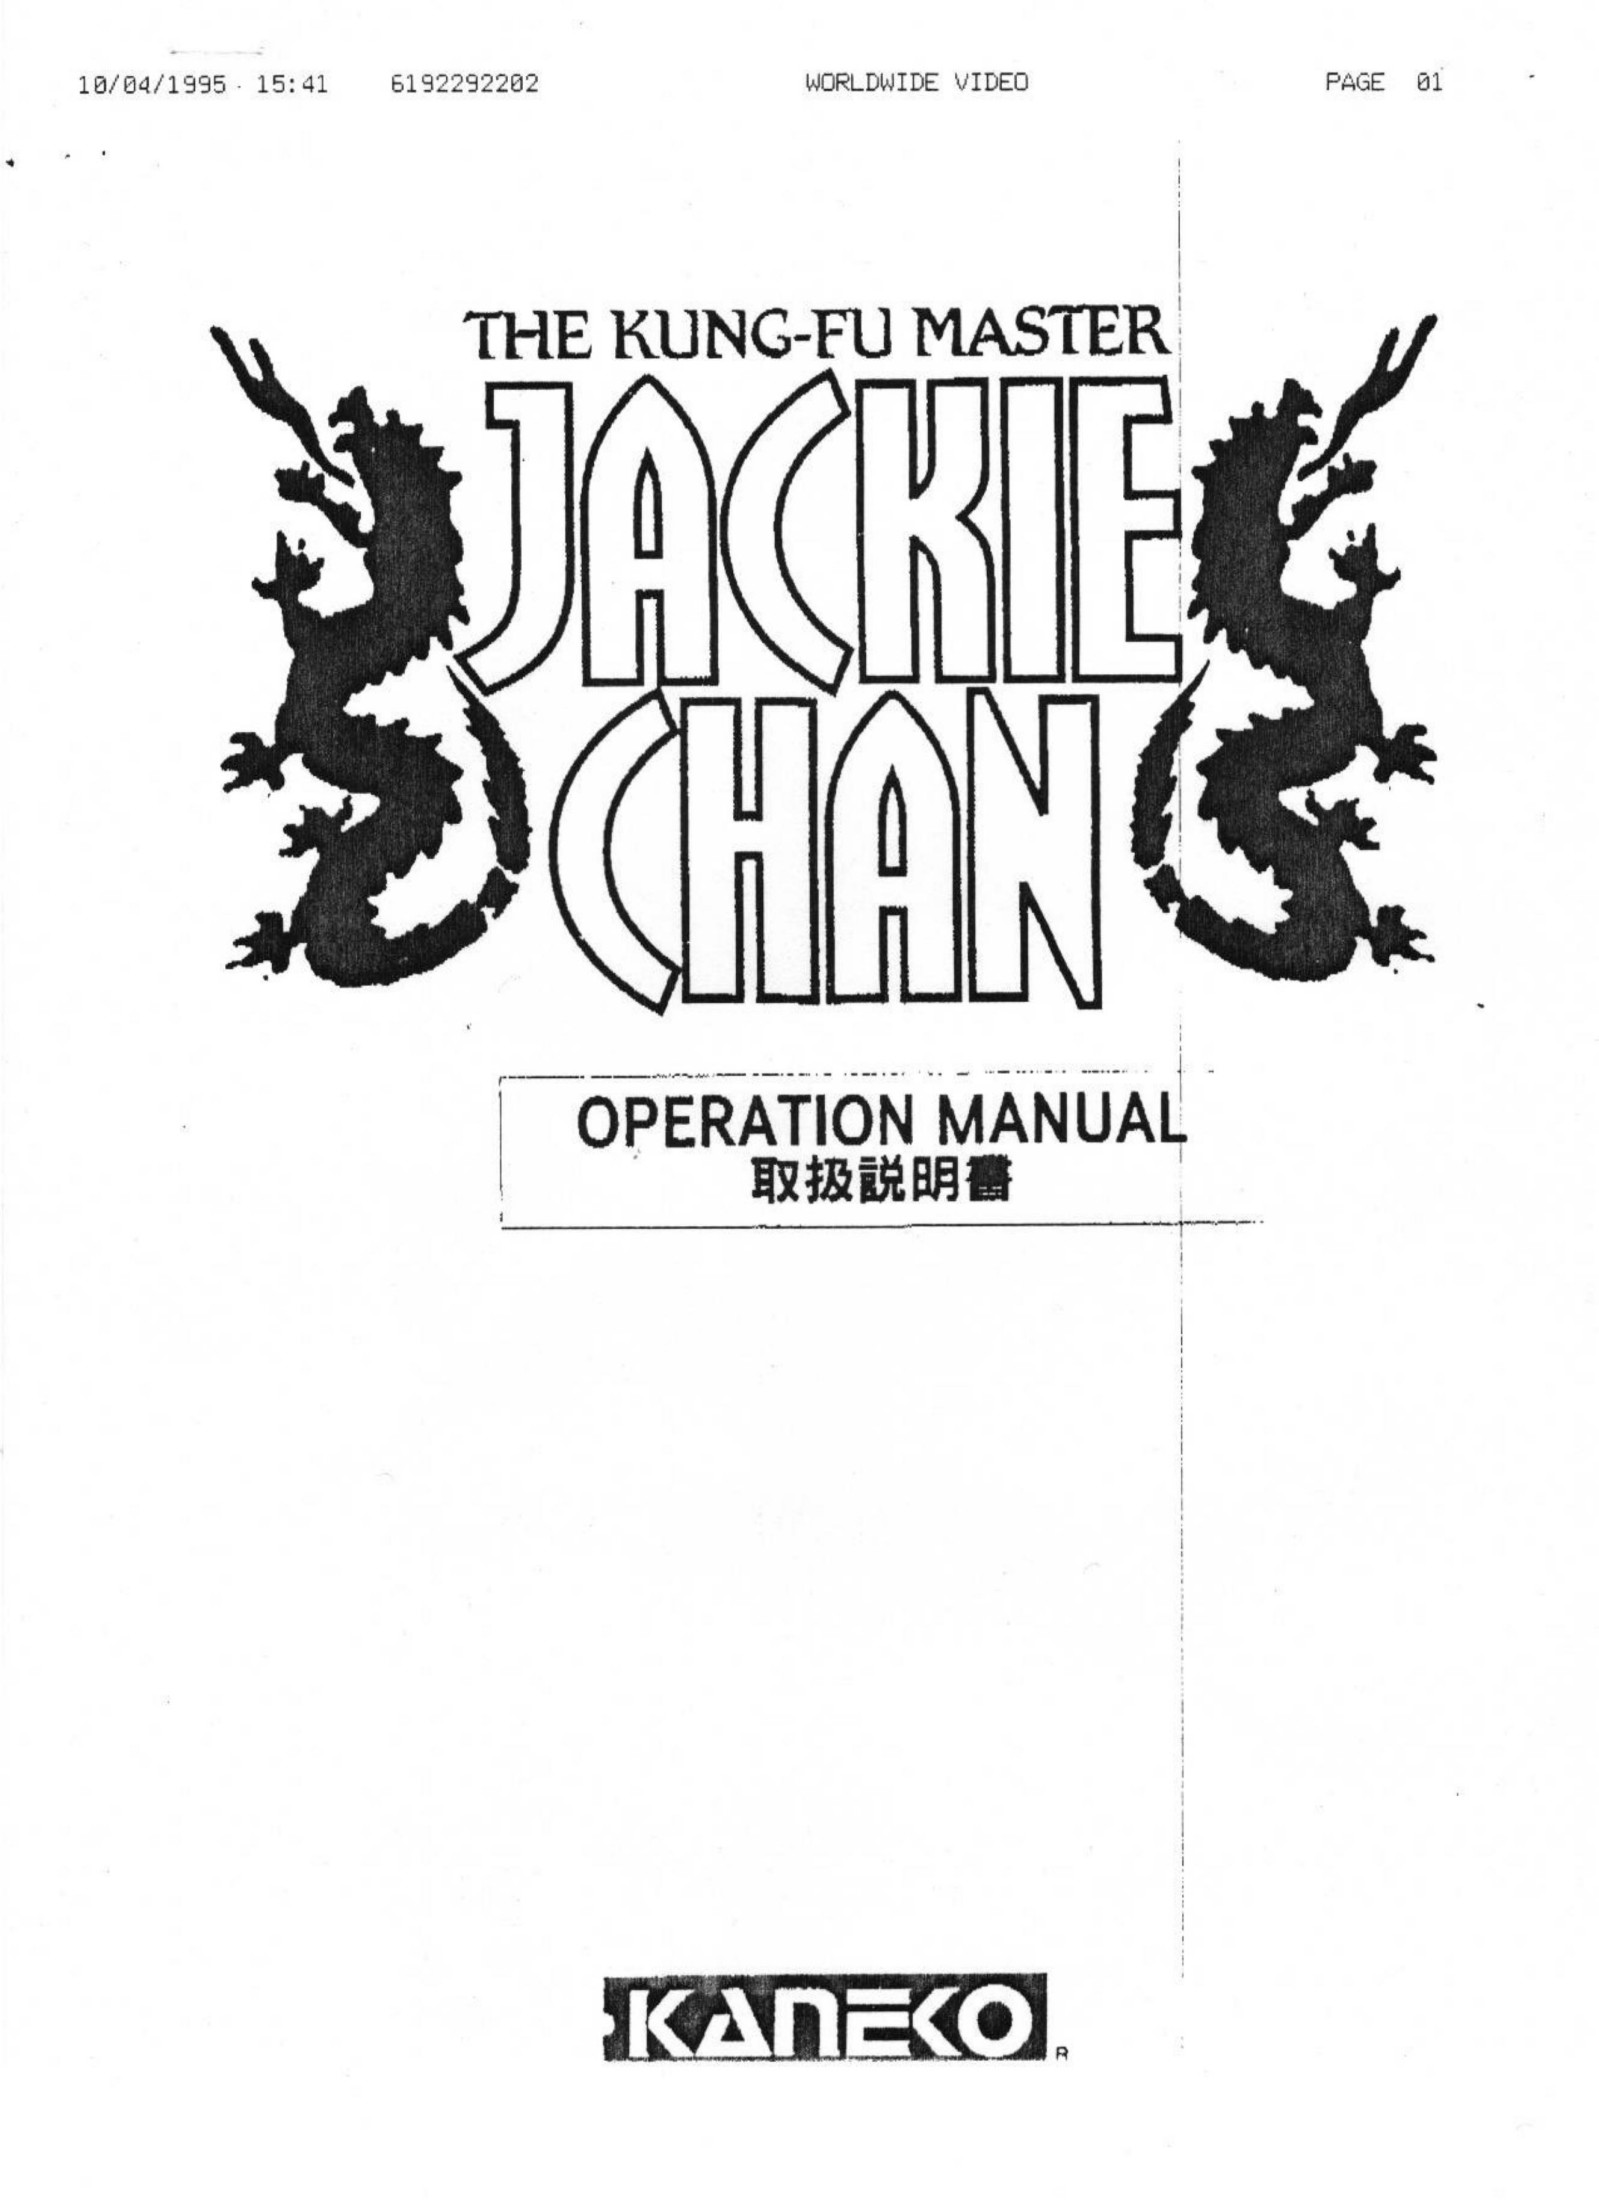 Jackie Chan The Kung-Fu Master Operation Manual